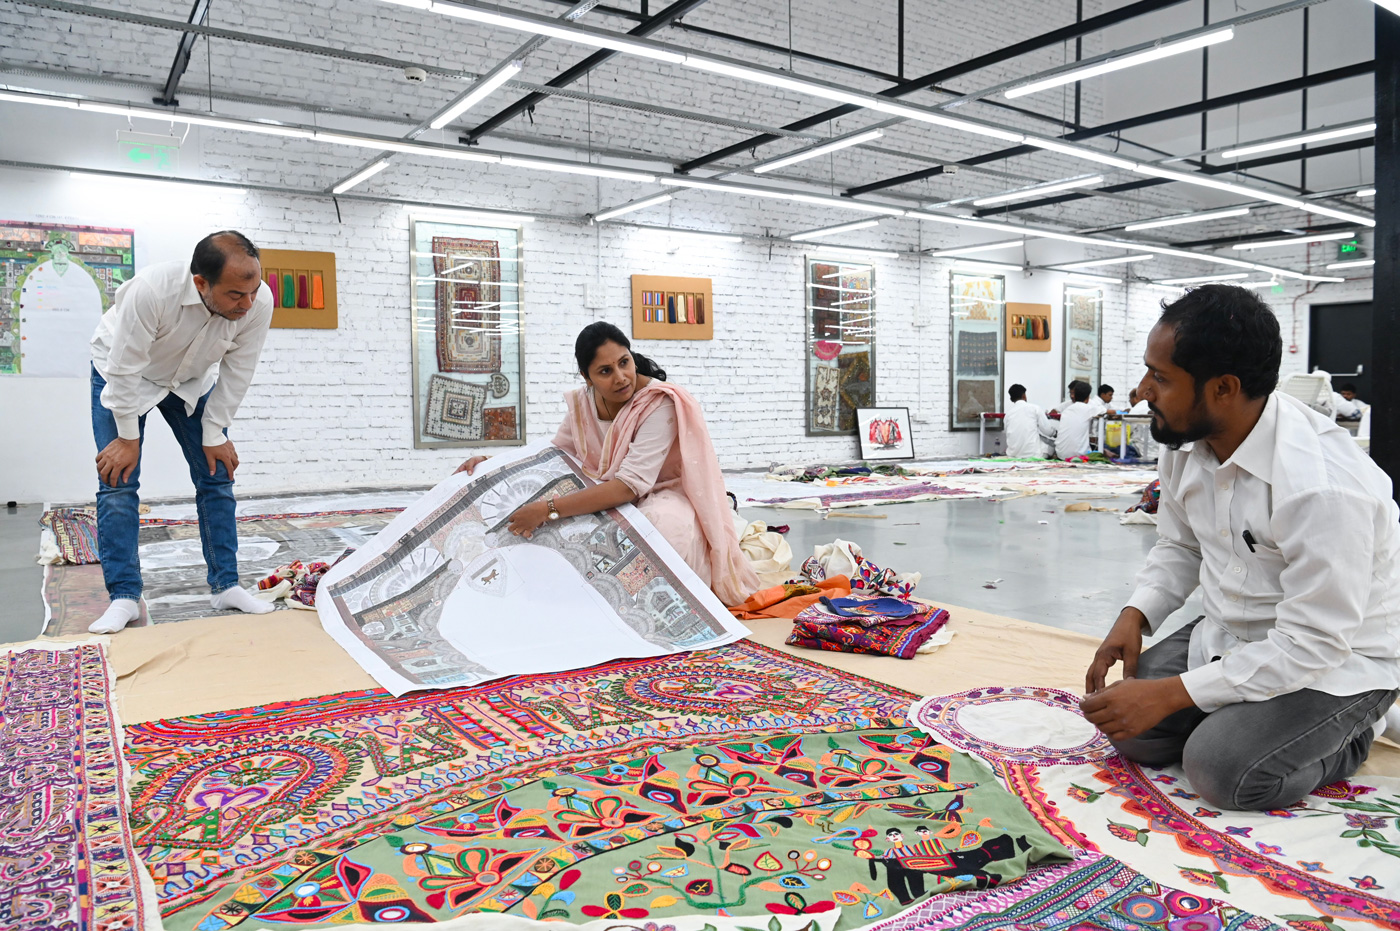 Chanakya工坊會因應每季新作的發想靈感，激盪出不一樣的創新技法，也提供女性學習技藝與工作的機會。（圖片來源／Dior）